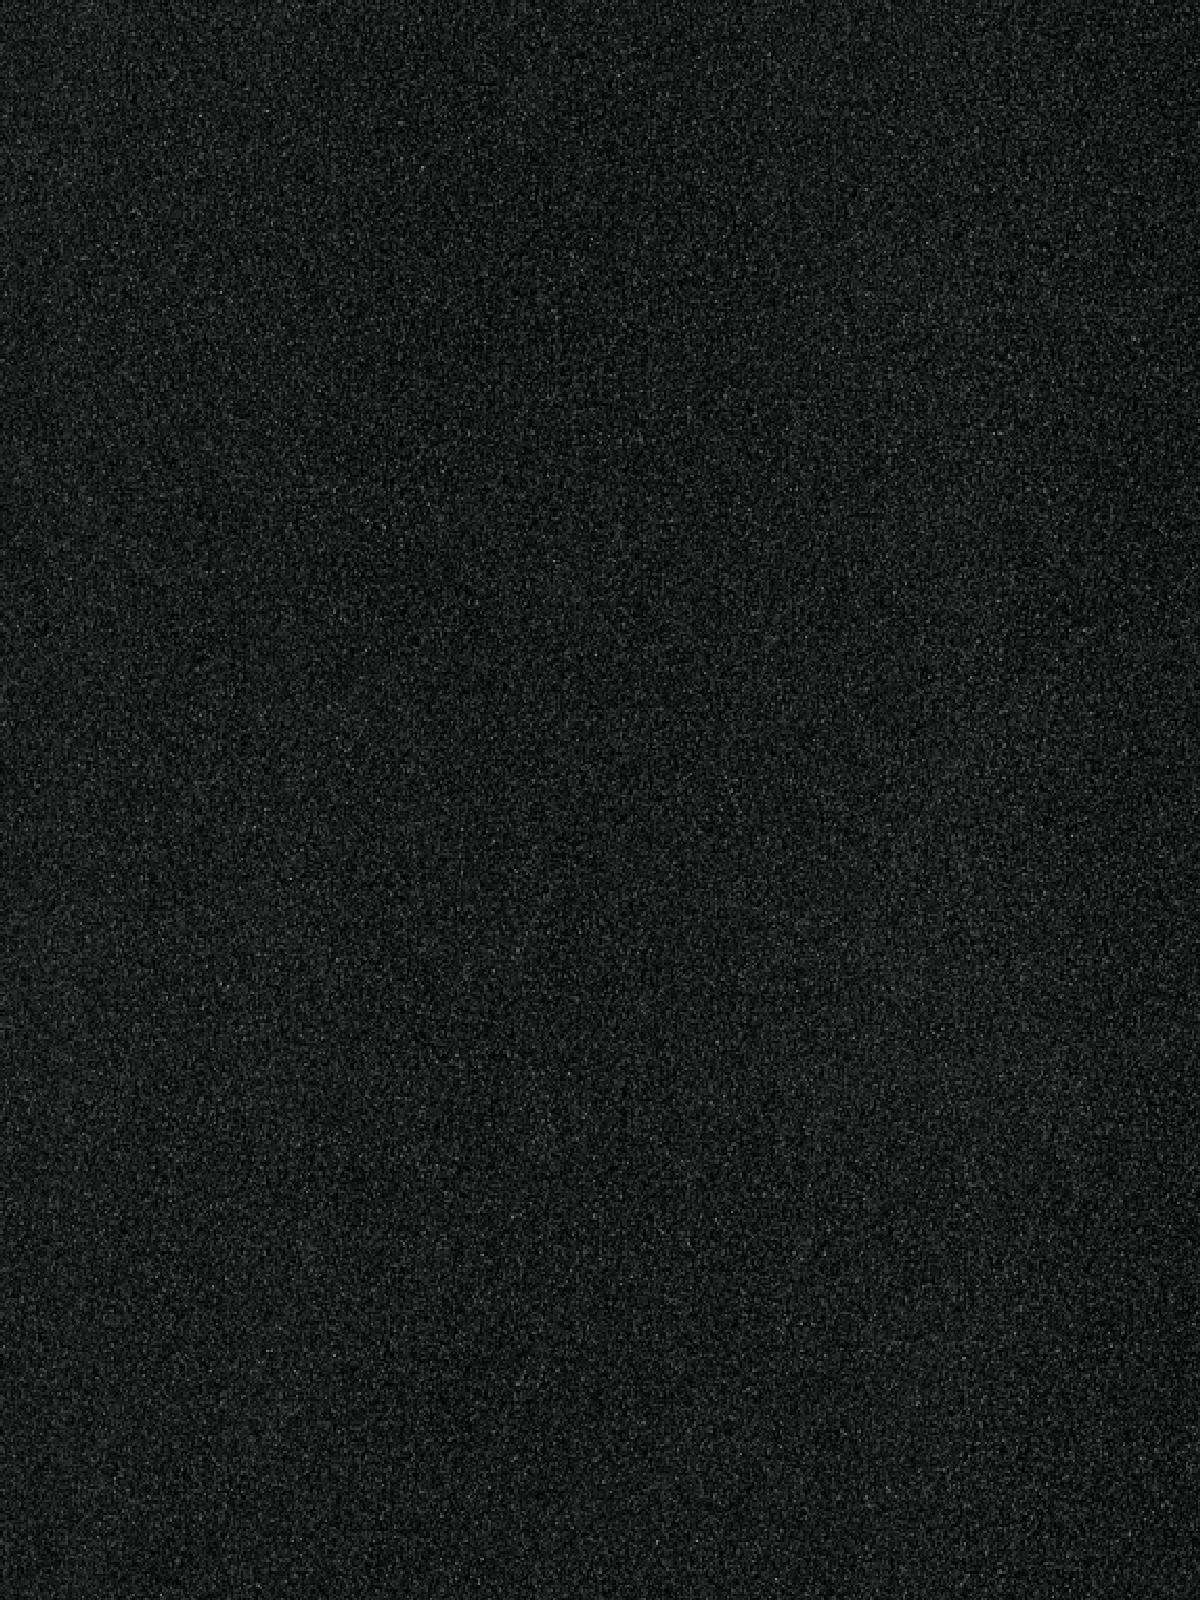 Black Glitter Wallpaper   Desktop Backgrounds 1200x1600